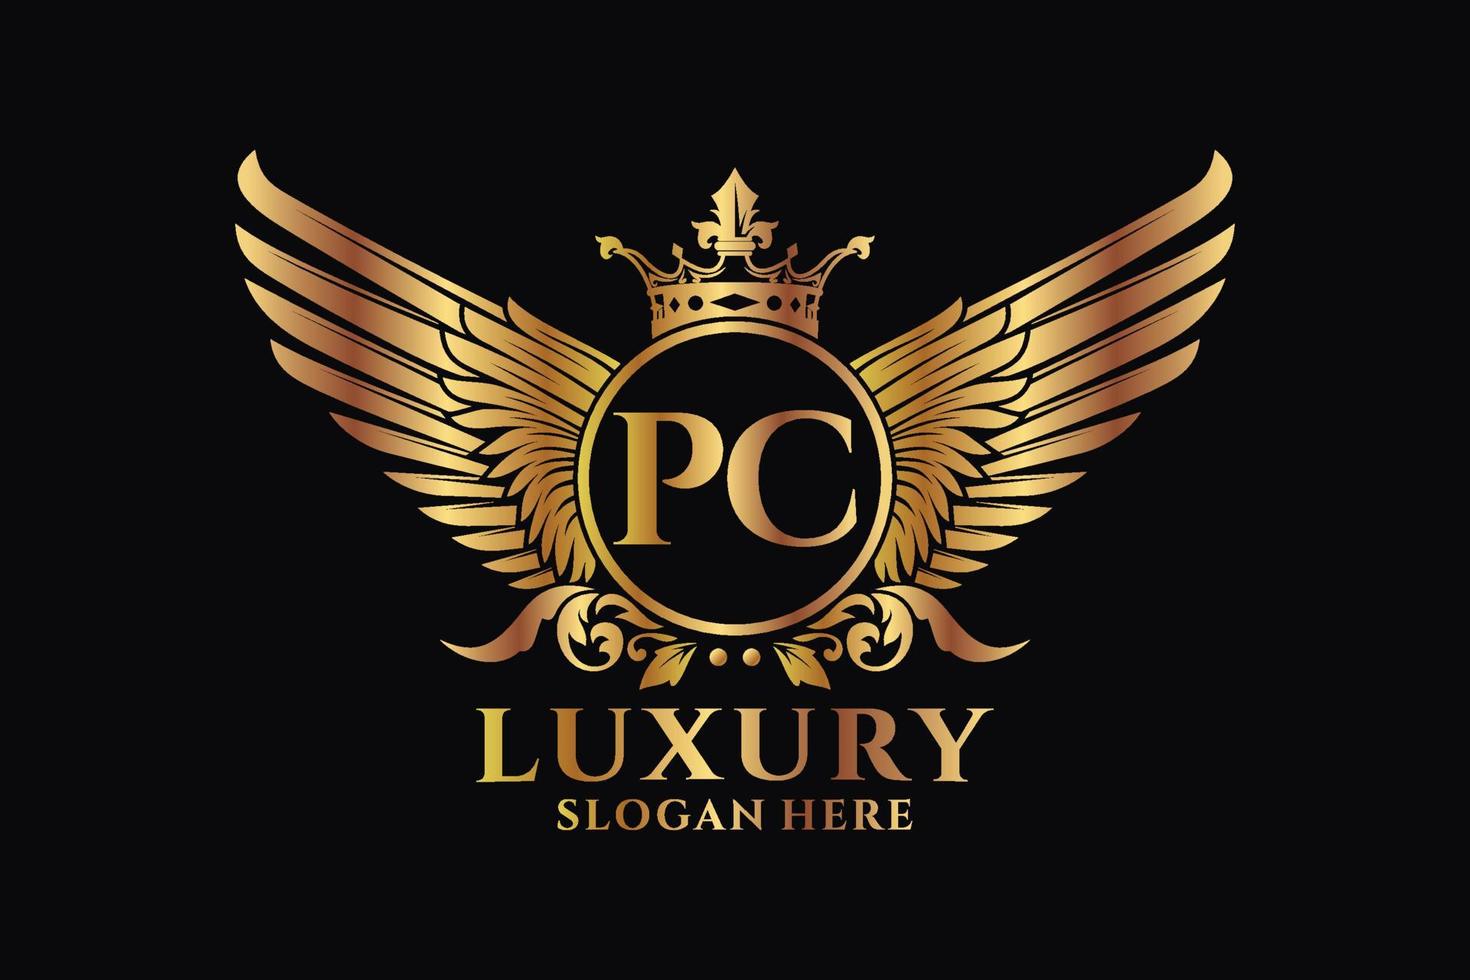 luxe Koninklijk vleugel brief pc kam goud kleur logo vector, zege logo, kam logo, vleugel logo, vector logo sjabloon.